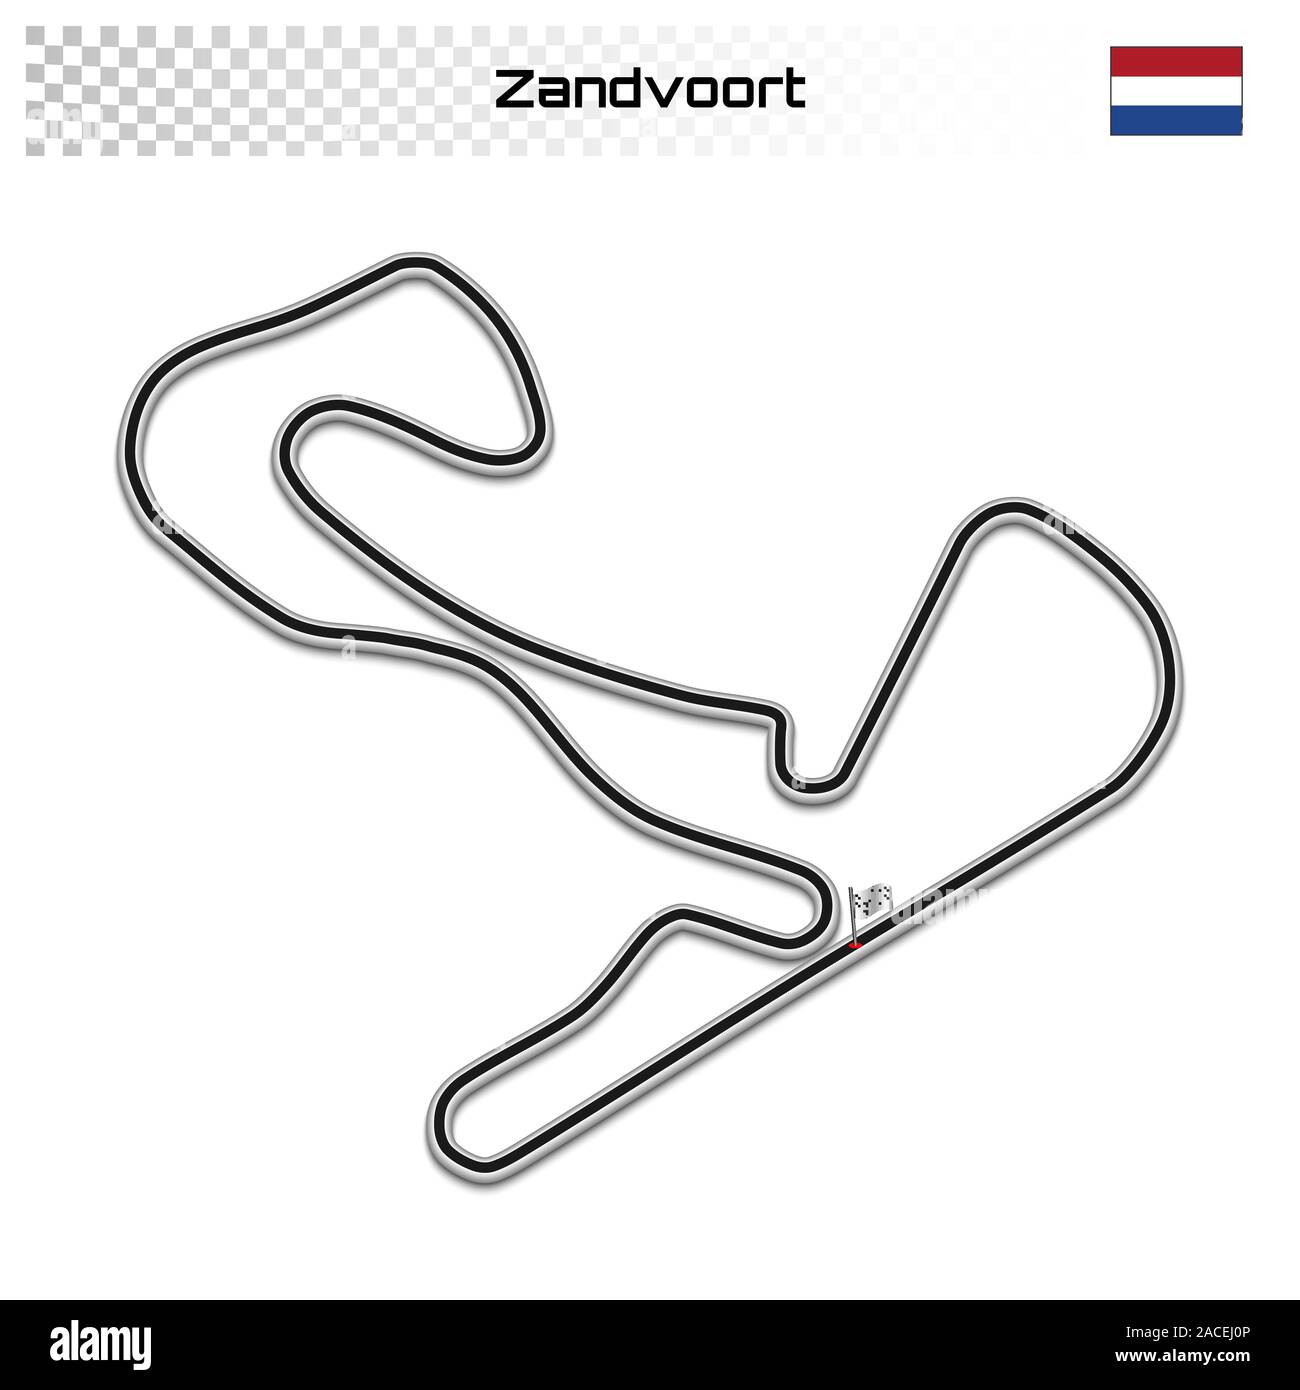 Zandvoort circuit for motorsport and autosport. Dutch grand prix race track. Stock Vector